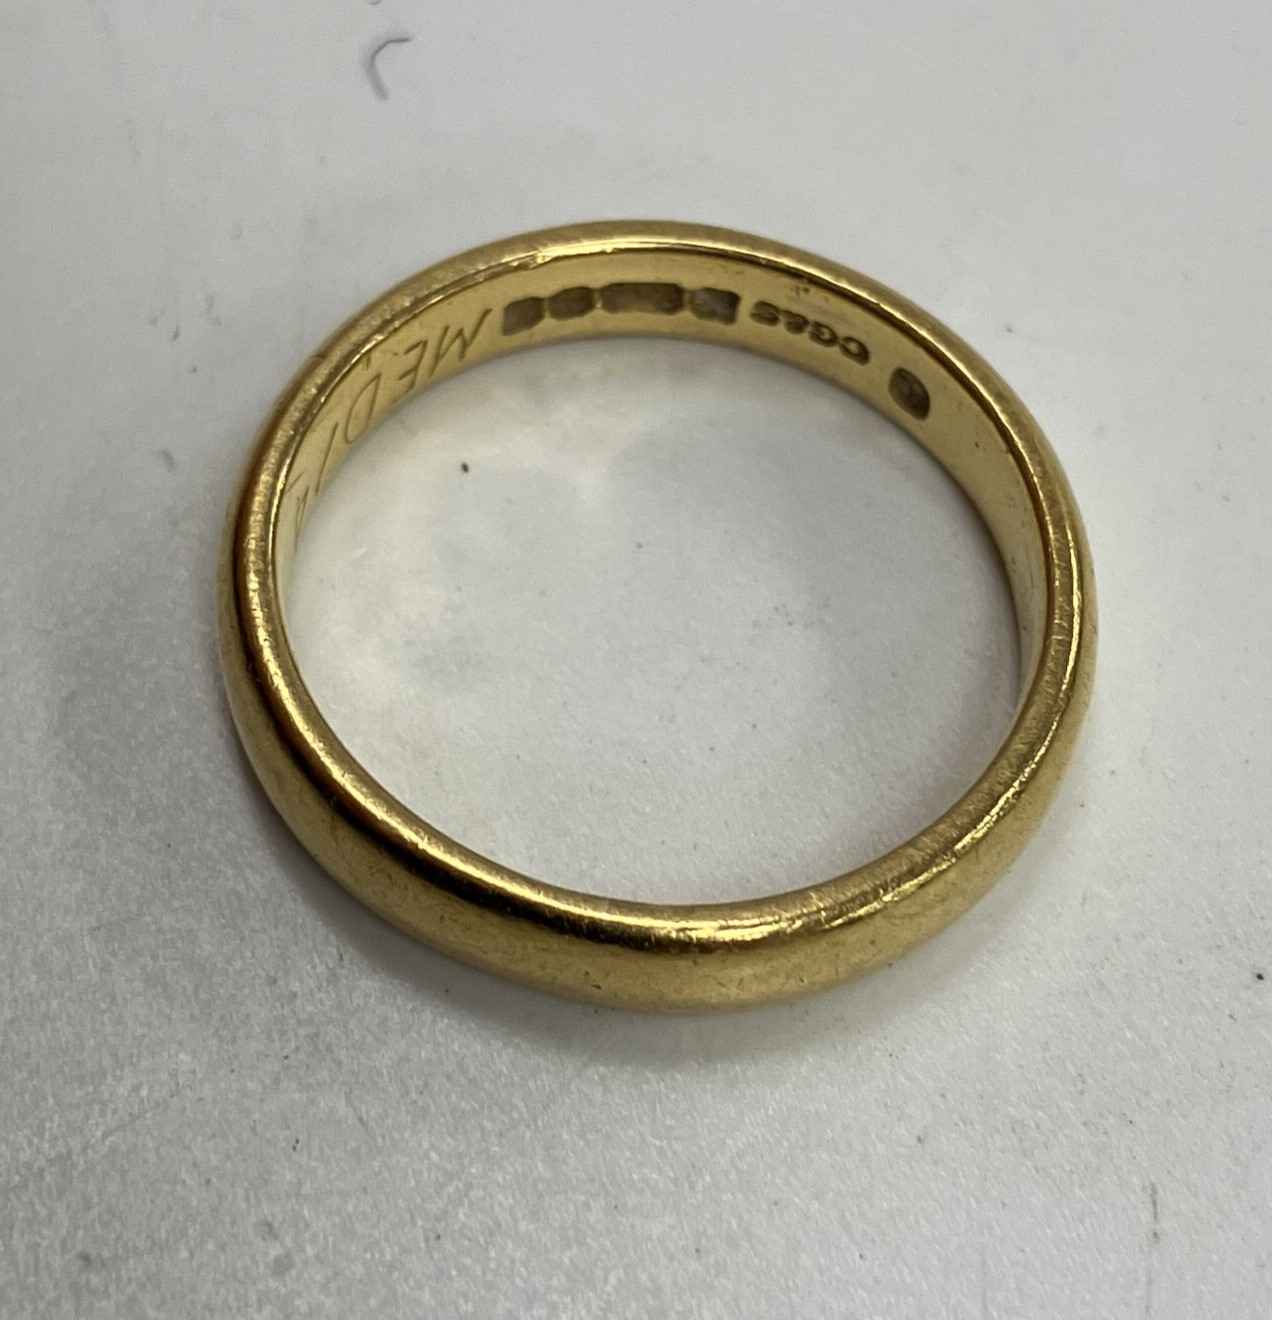 A plain gold (916) wedding band, size M / N, 5.